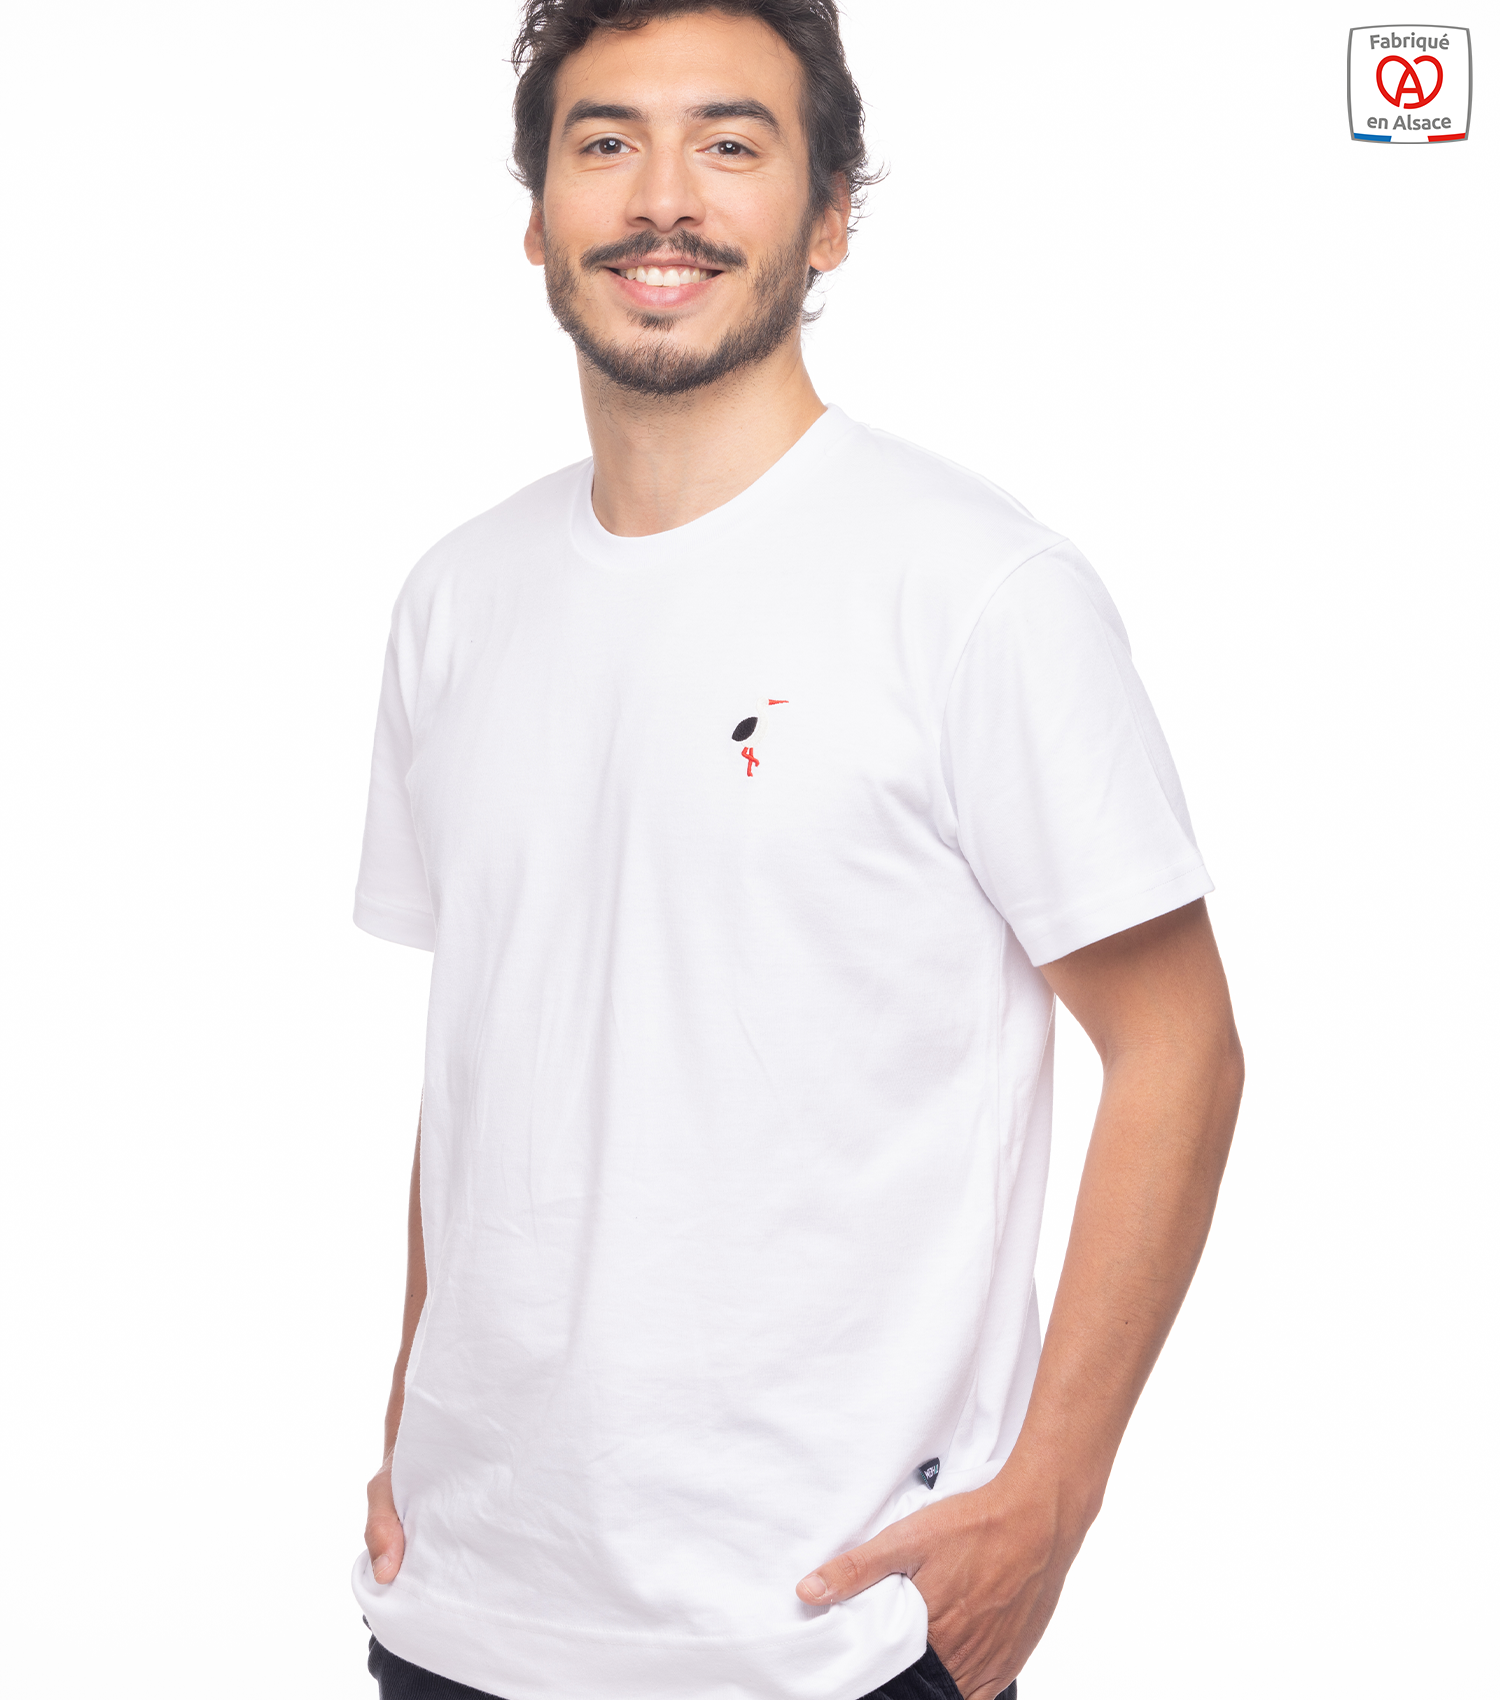 theim-t-shirt-made-in-france-mixte-blanc-cigogne-homme-1500-x-1700-px